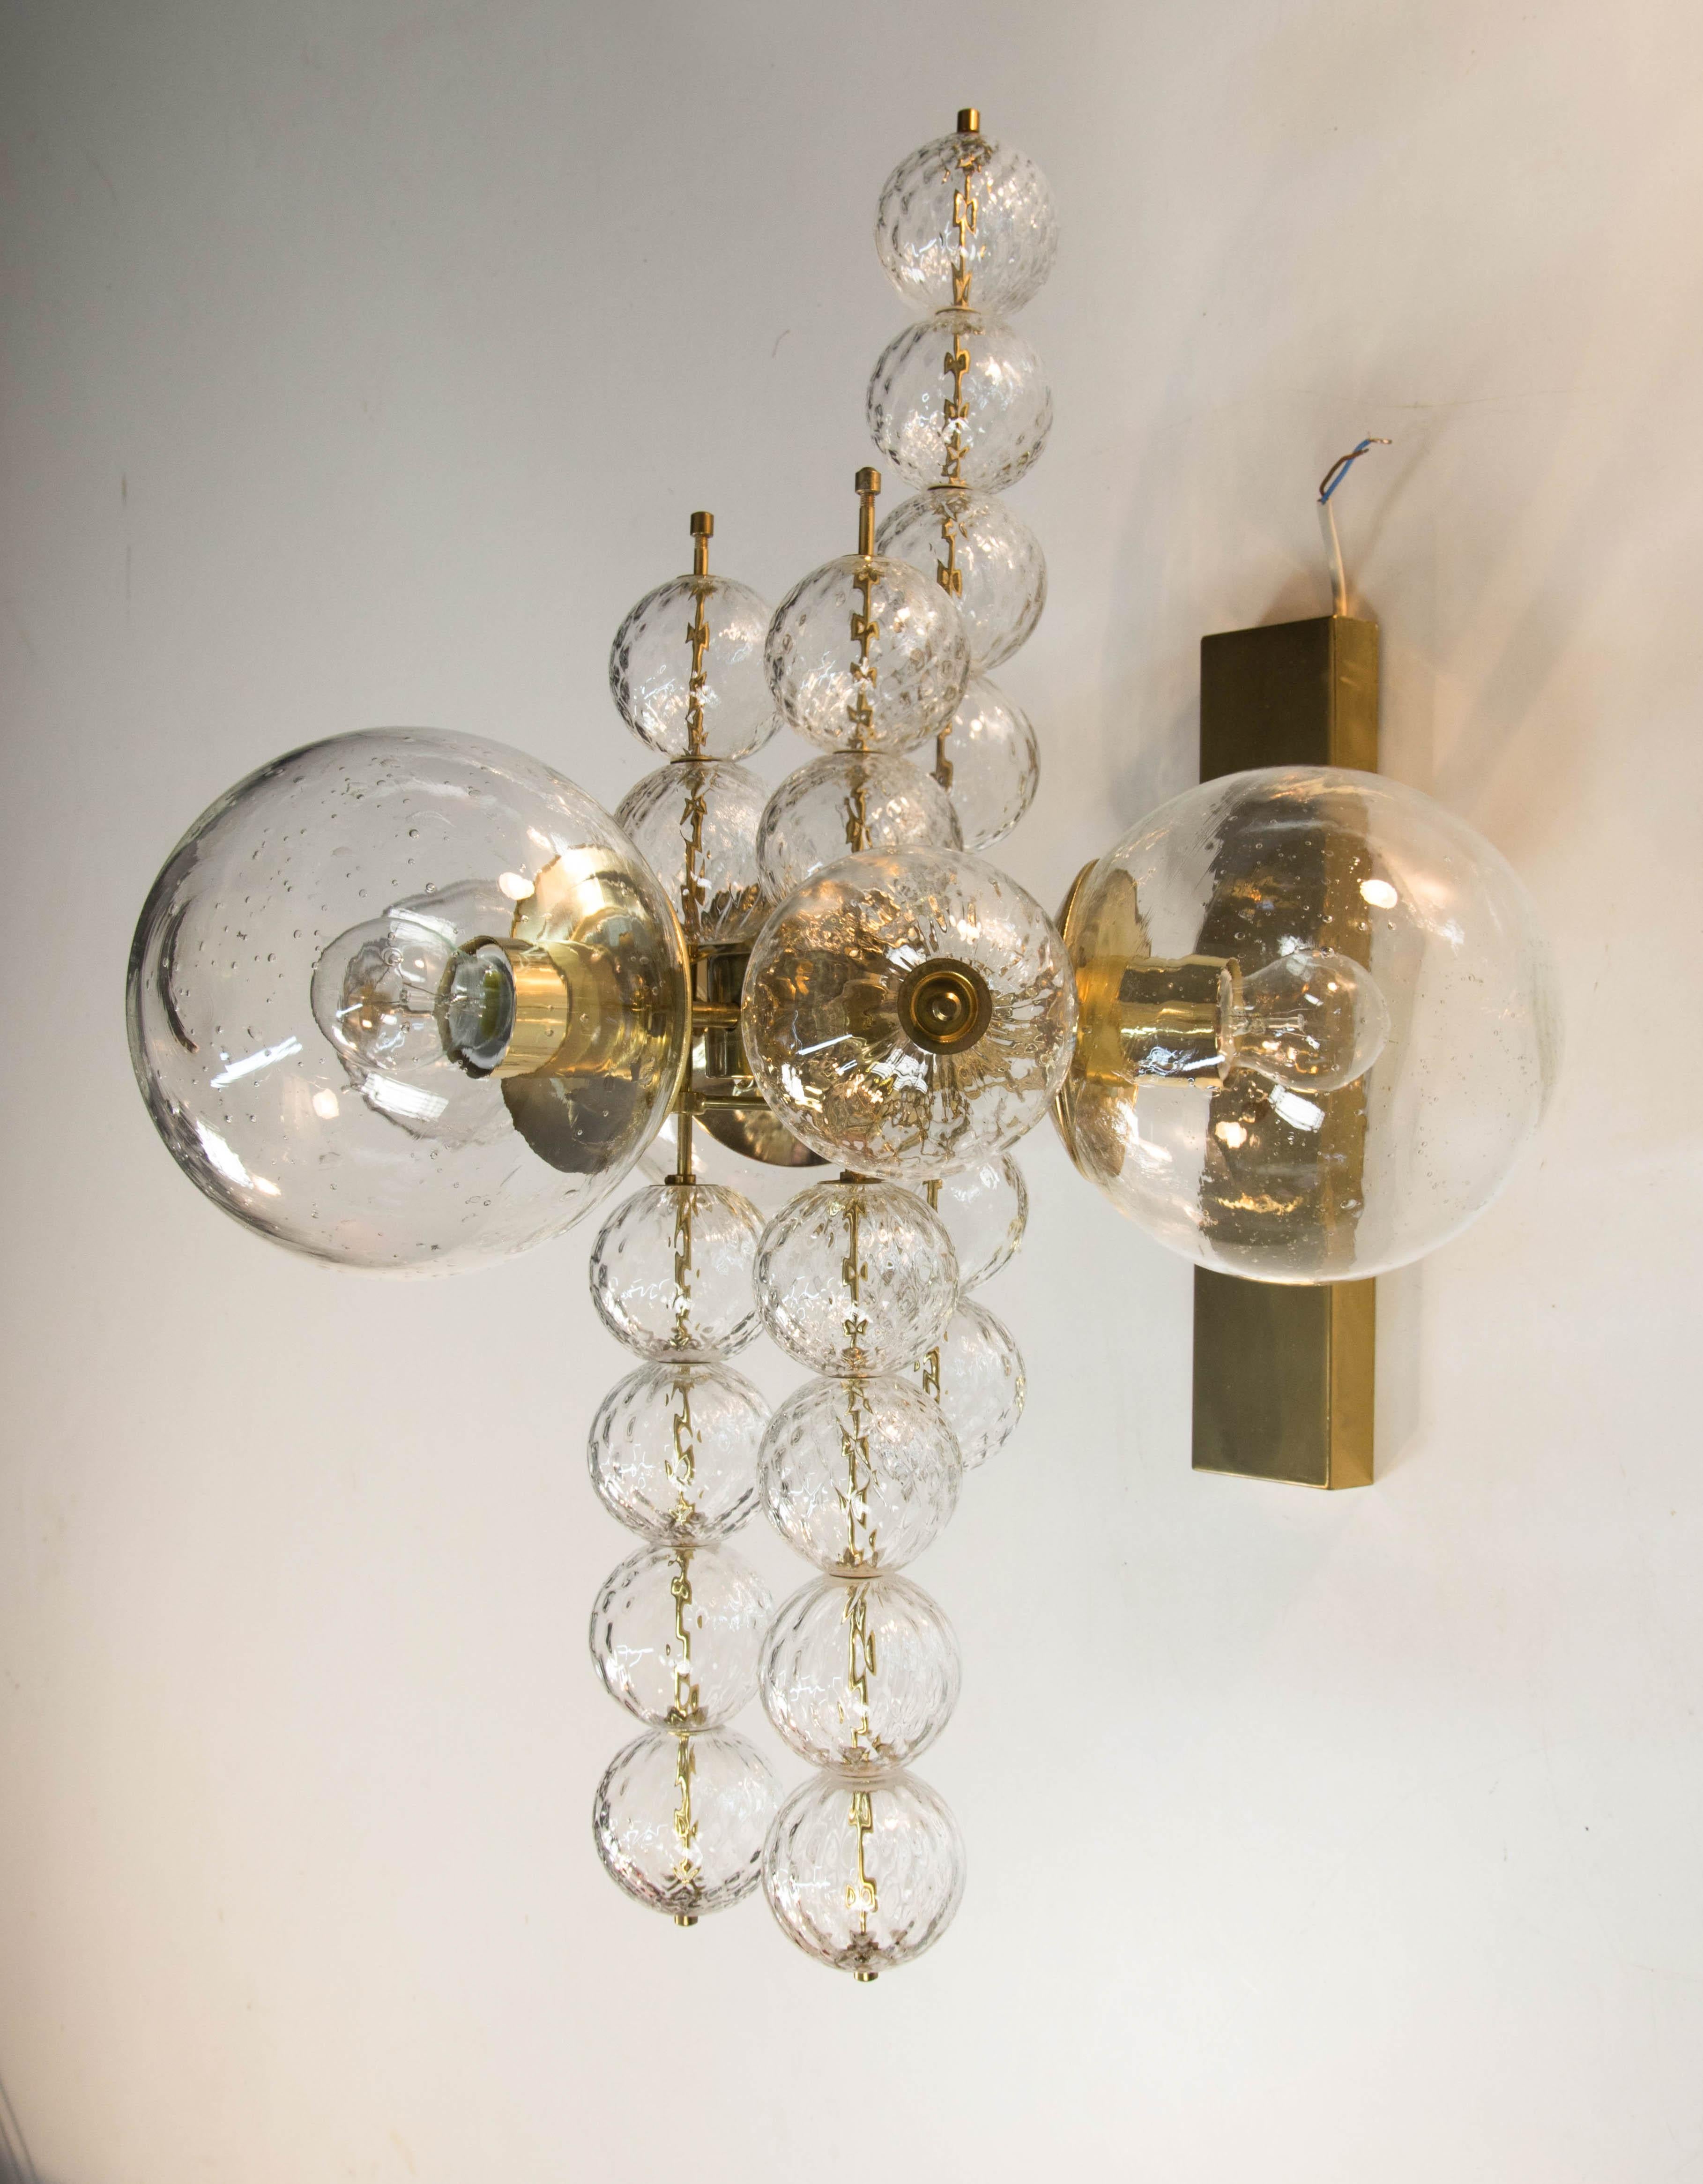 Luxury wall light fixture by Preciosa, Kamenicky Senov, Czechoslovakia.
Item consists of brass construction, 3 big glass globes (8